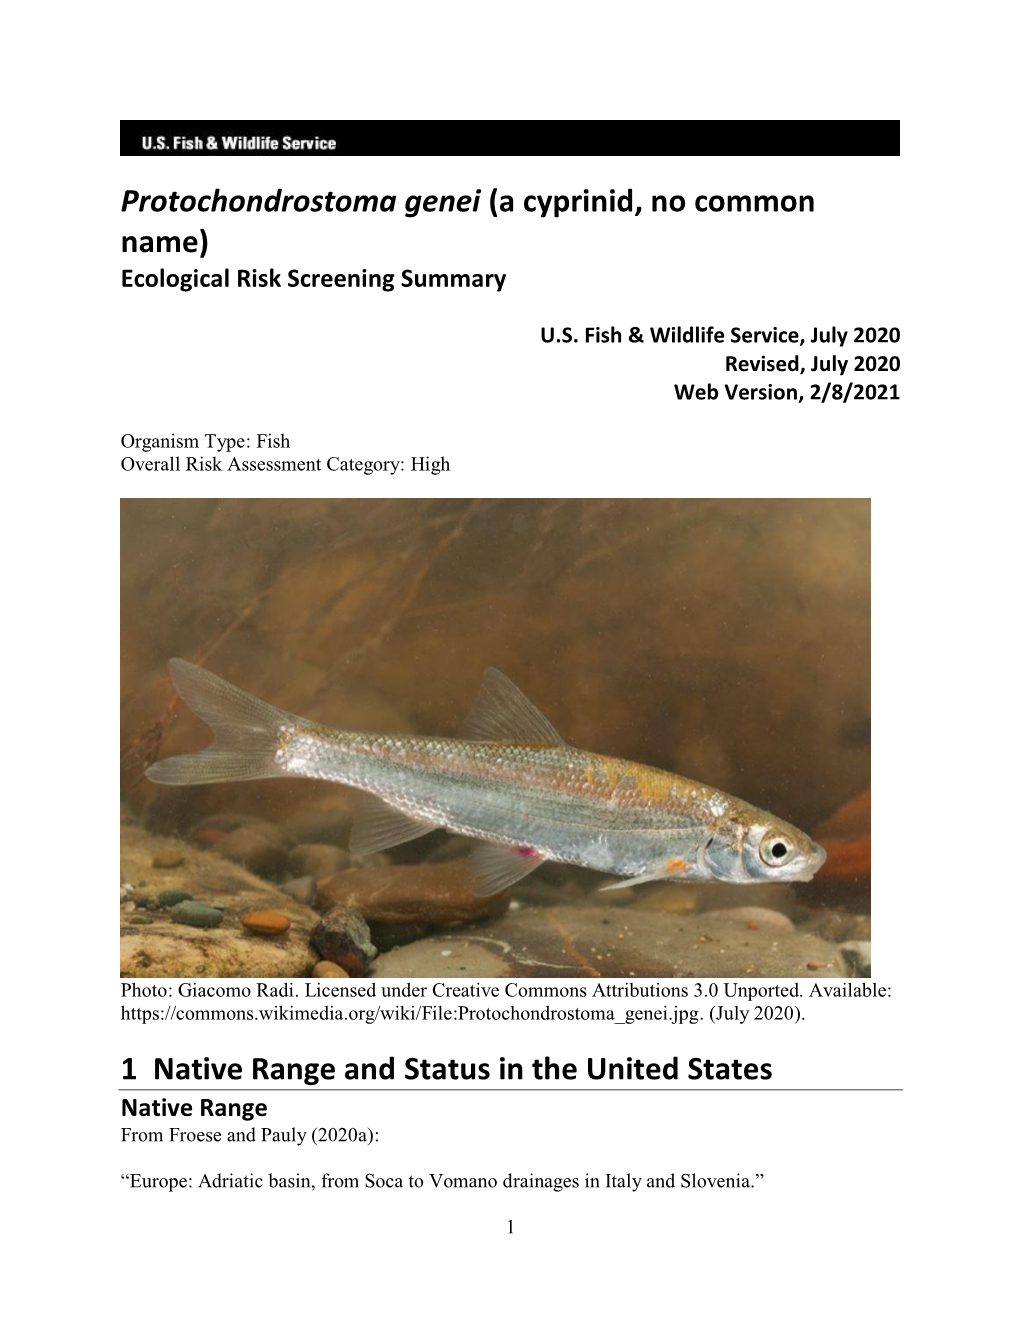 Protochondrostoma Genei (A Cyprinid, No Common Name) Ecological Risk Screening Summary